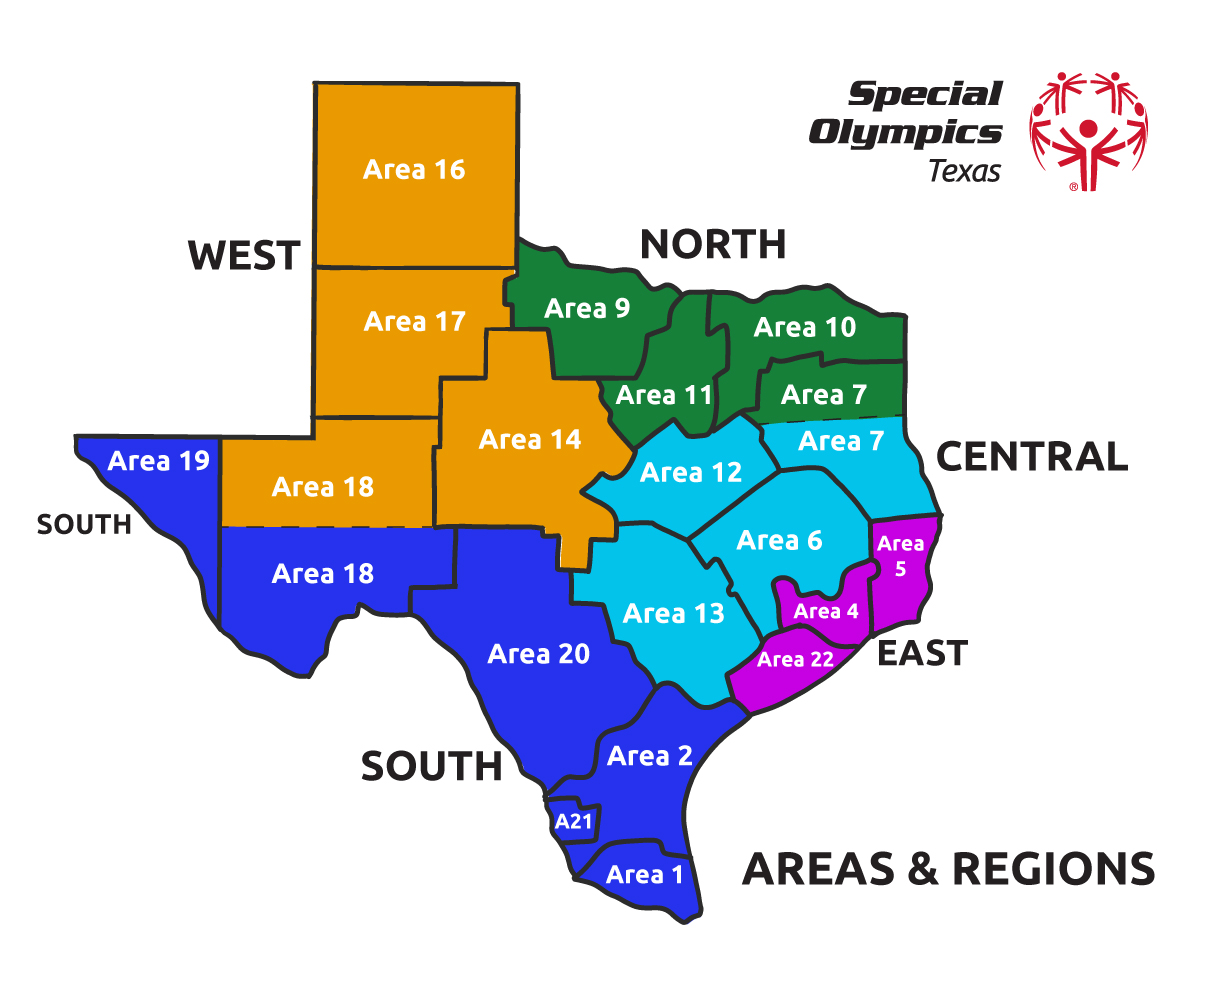 special-olympics-texas-map-areas-regions